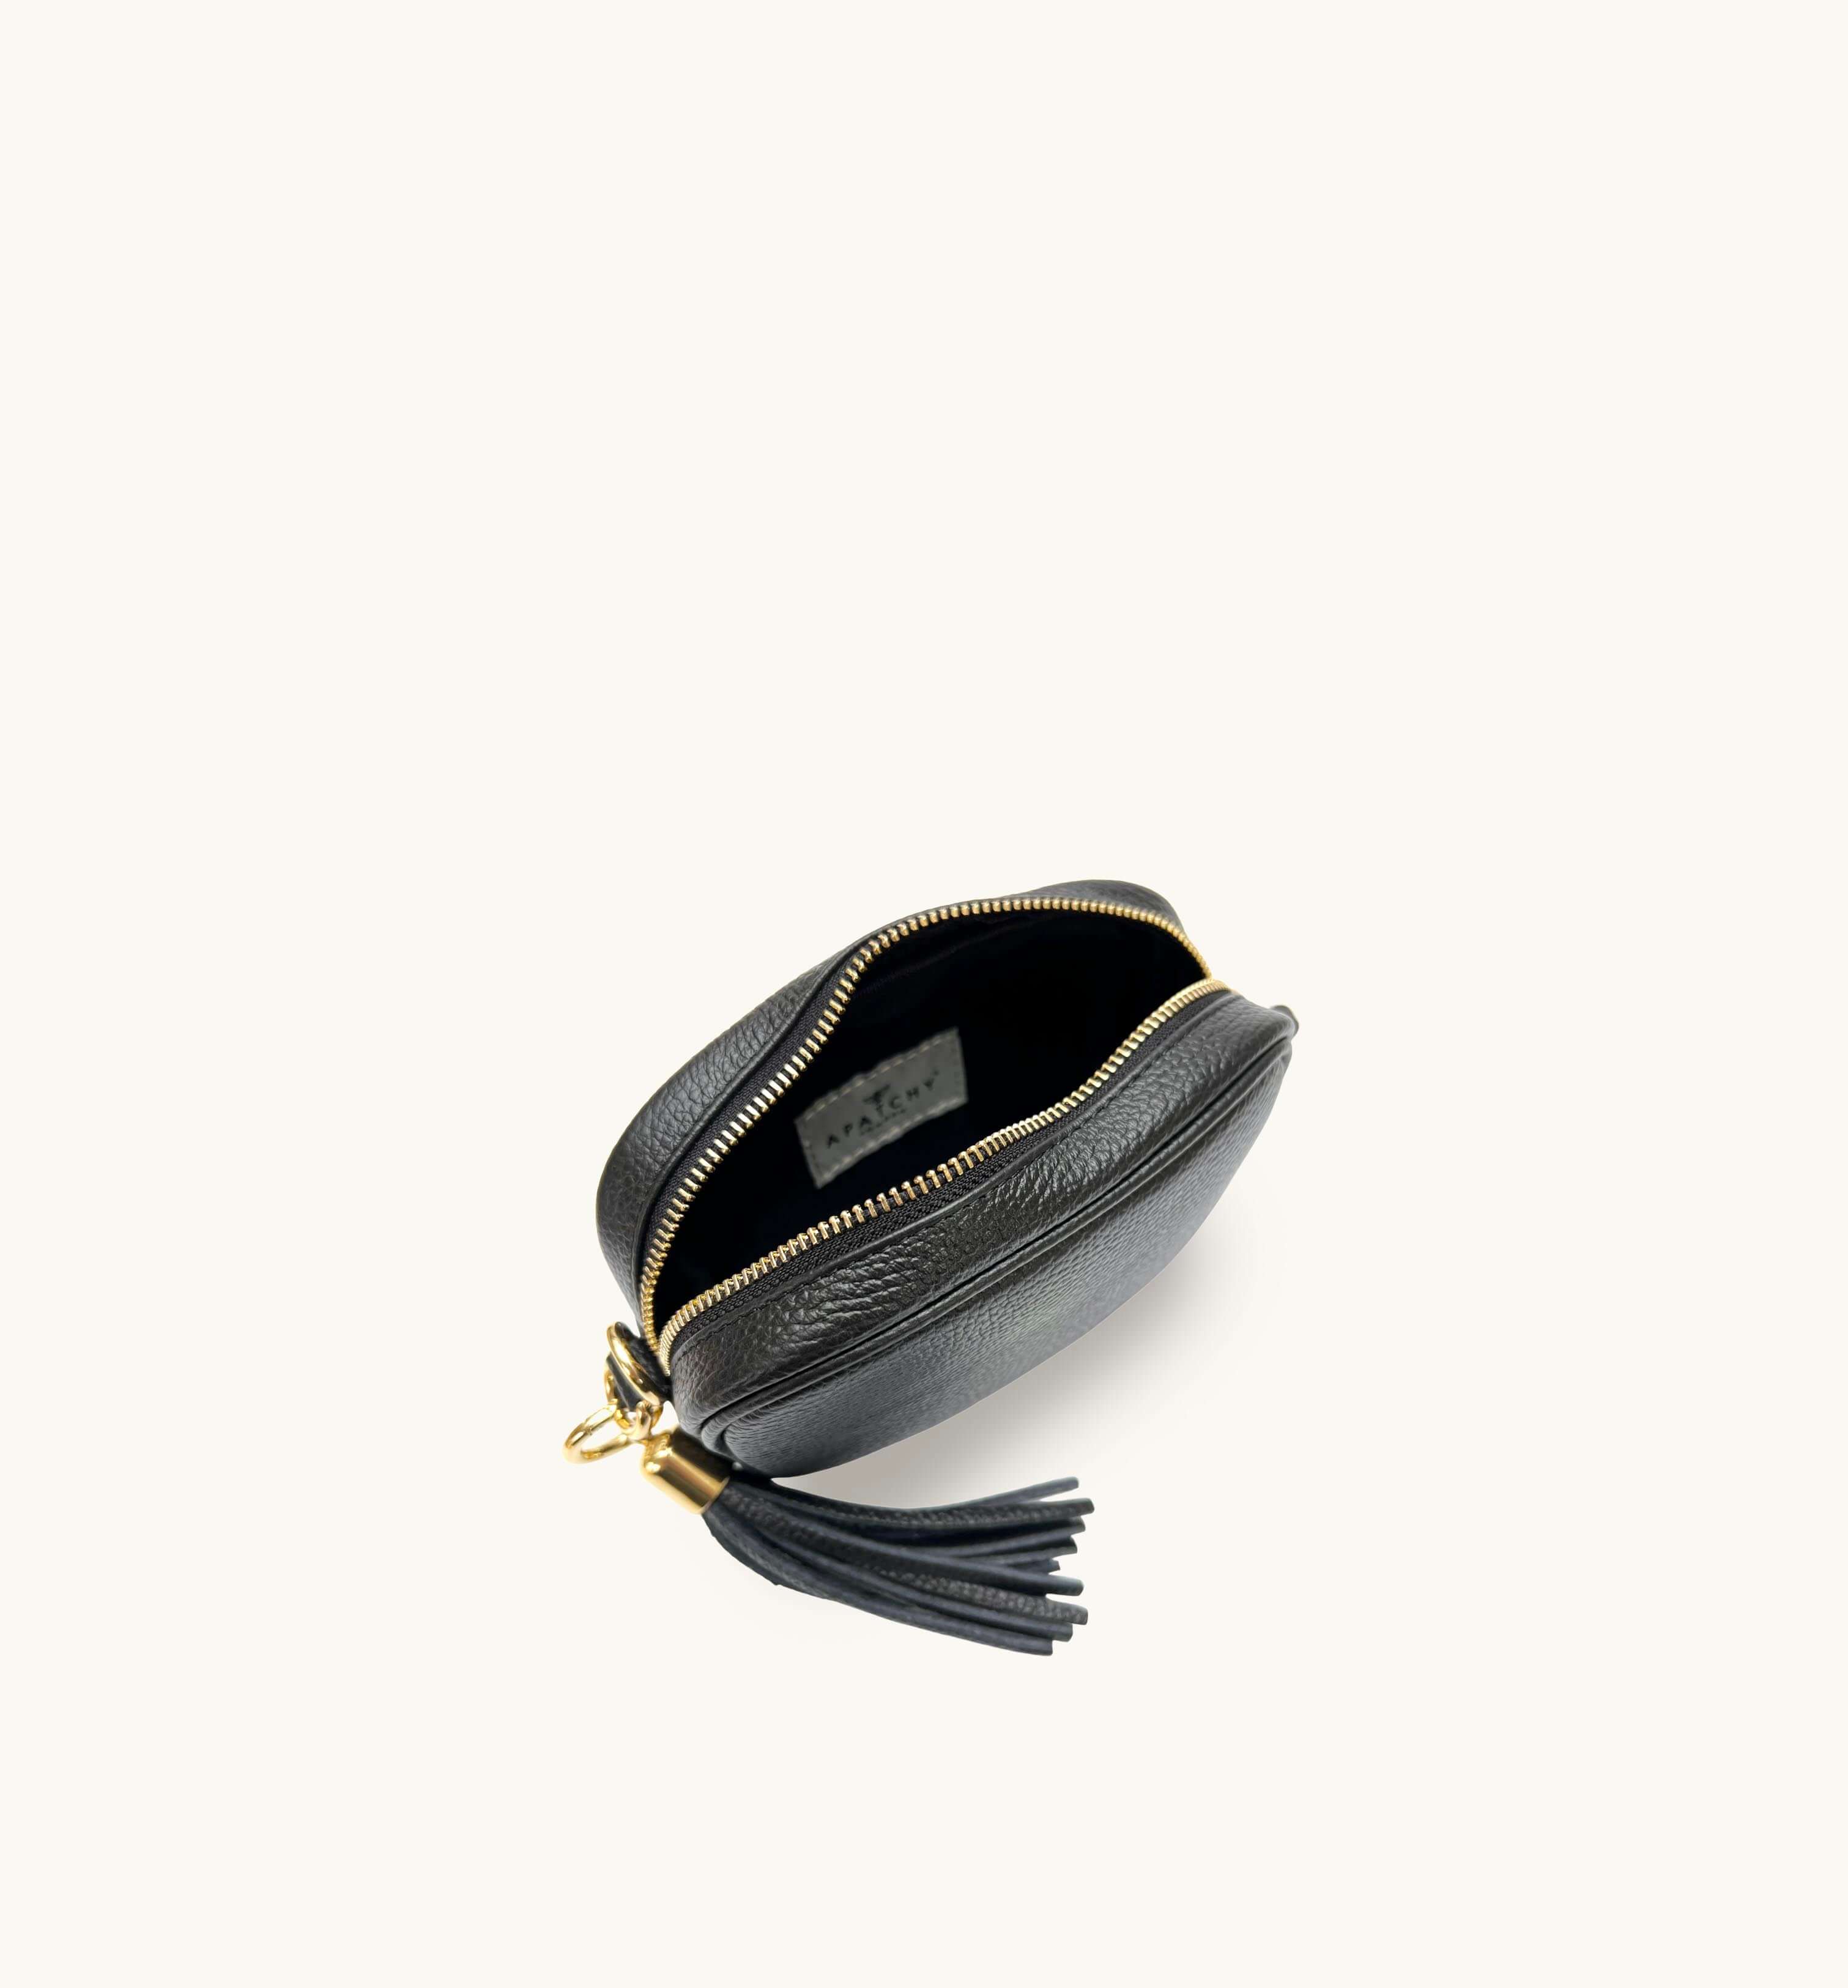 The Mini Tassel Black Leather Phone Bag With Black & Stone Arrow Strap